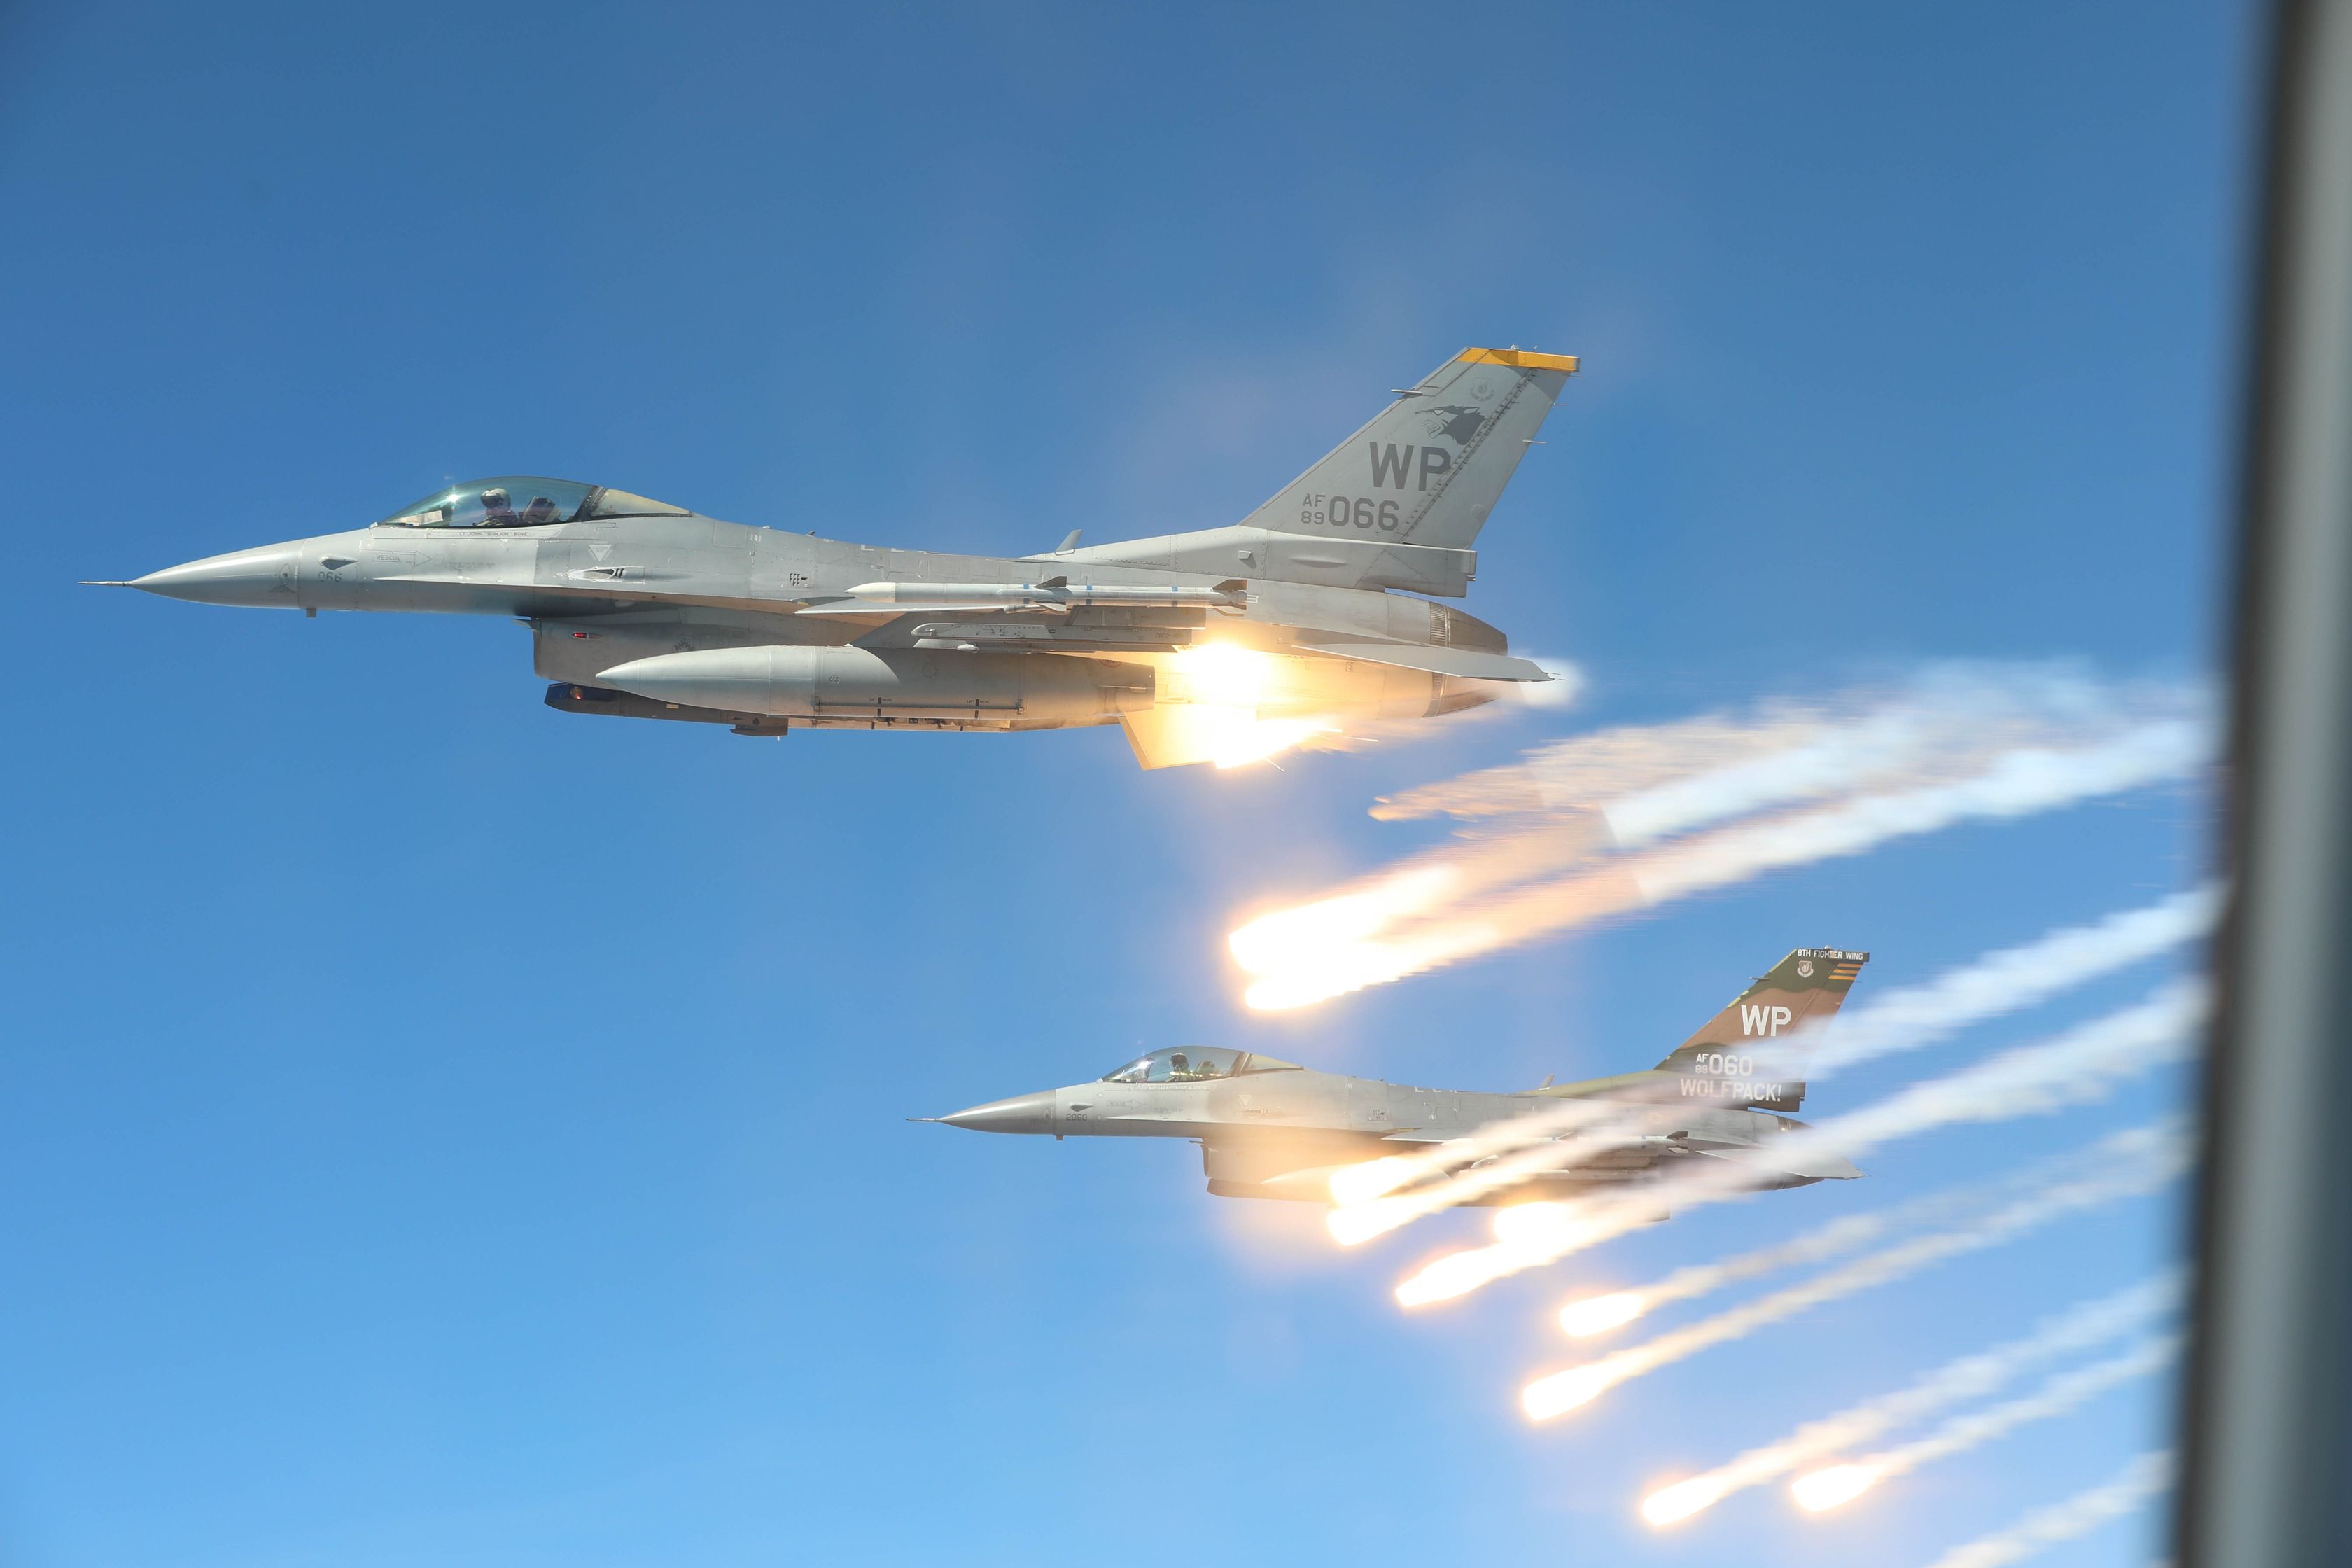 Two Lockheed Martin F-16 Fighting Falcons deploying flares.